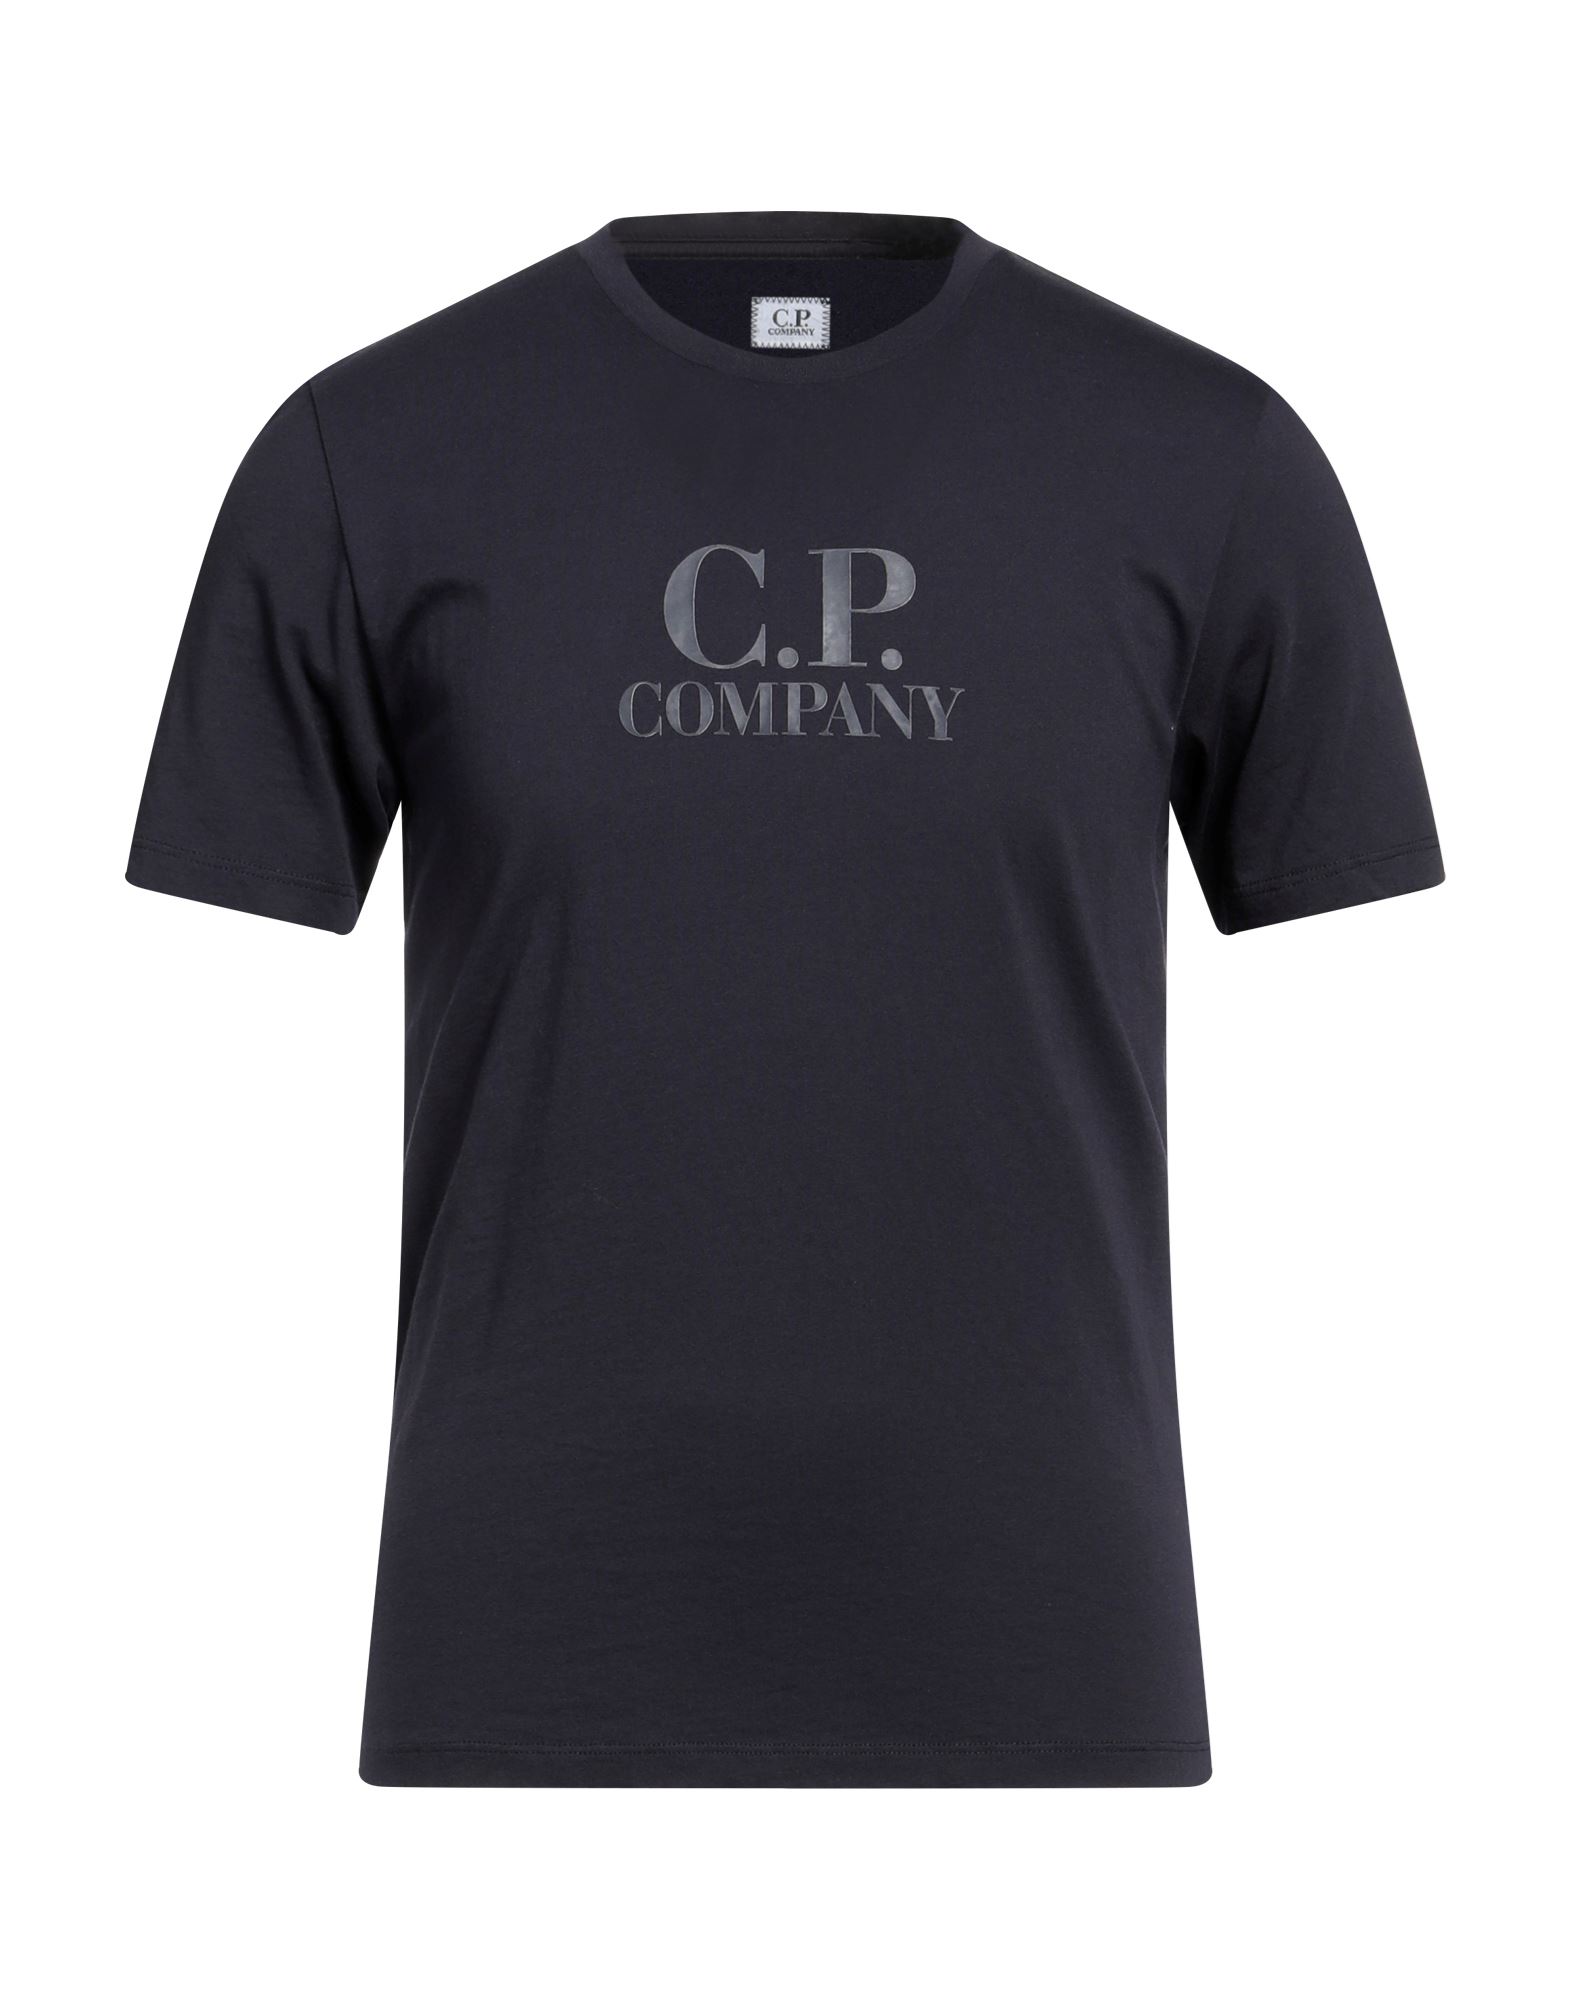 C.P. COMPANY T-shirts Herren Nachtblau von C.P. COMPANY